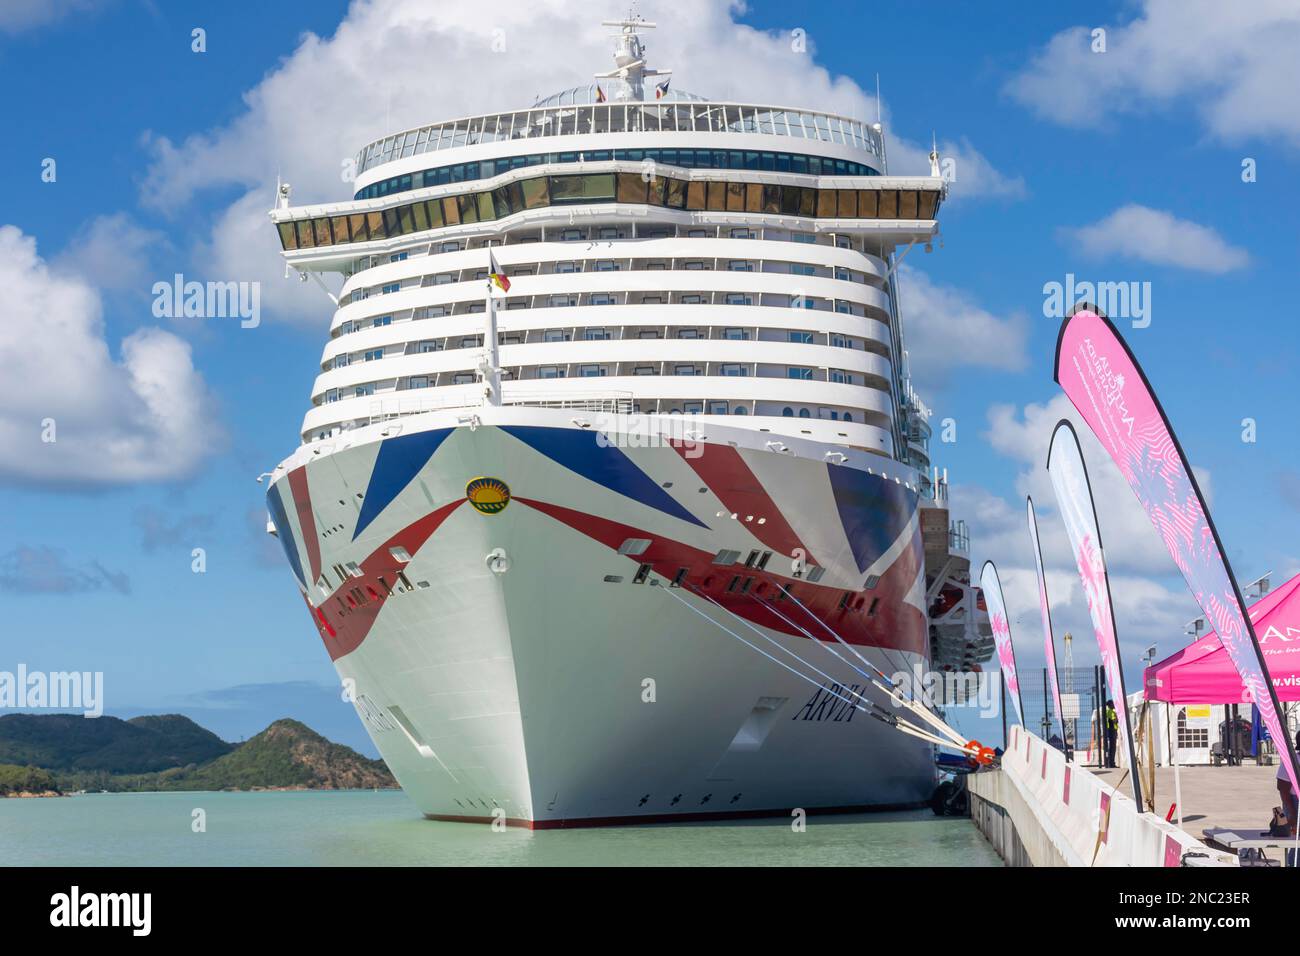 P&O Arvia Cruise Ship berthed in dock, St John's, Antigua, Antigua and Barbuda, Lesser Antilles, Caribbean, Caribbean Stock Photo